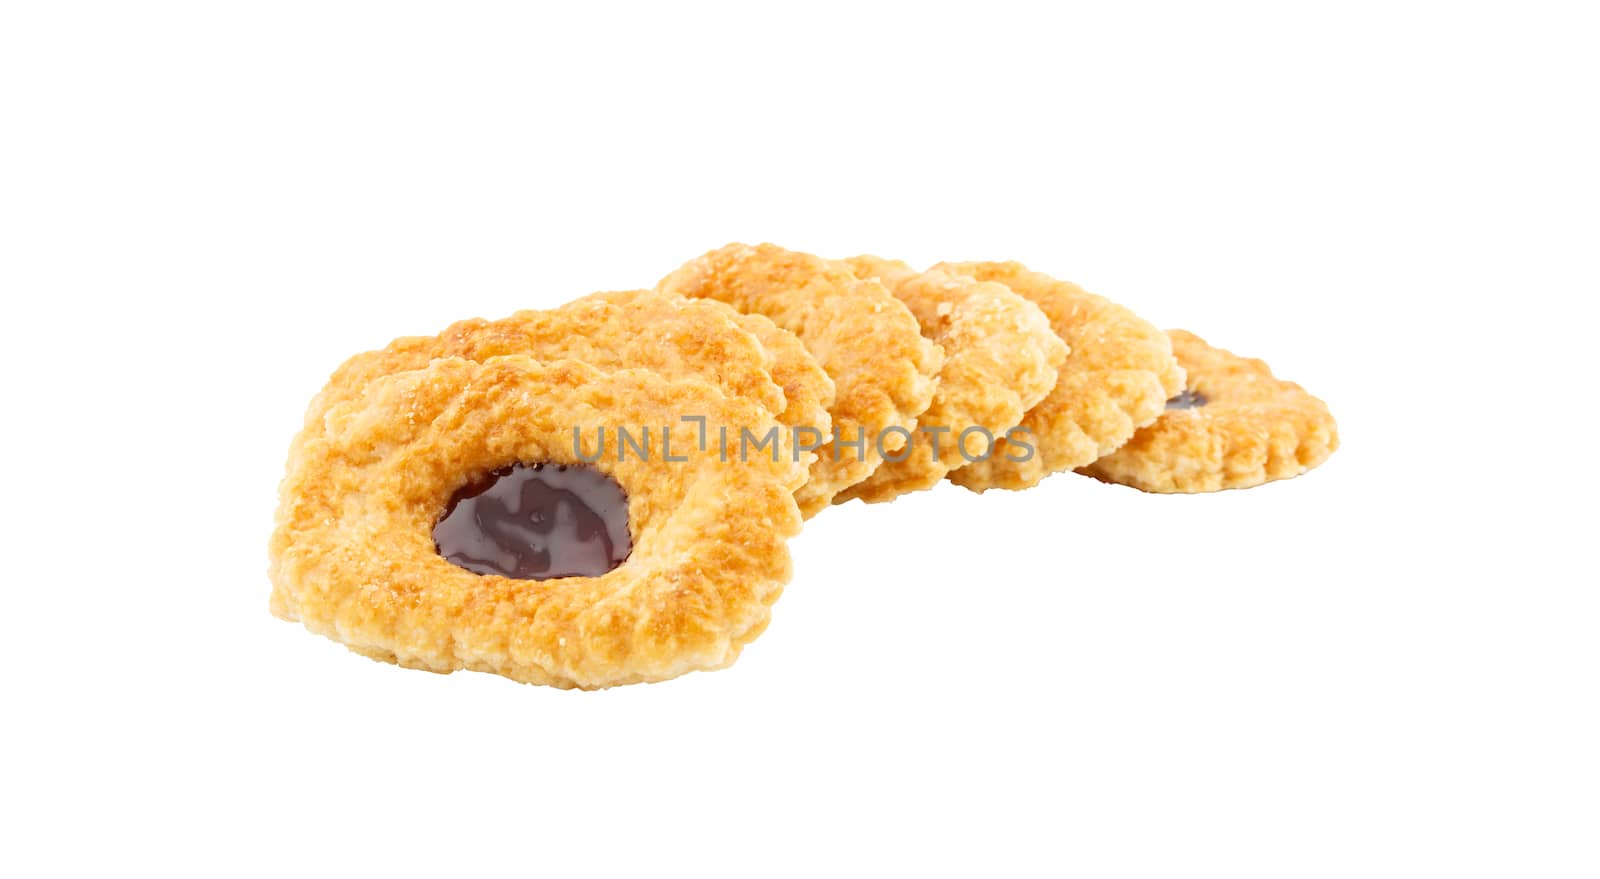 Blueberry crispy pie isolated on white background